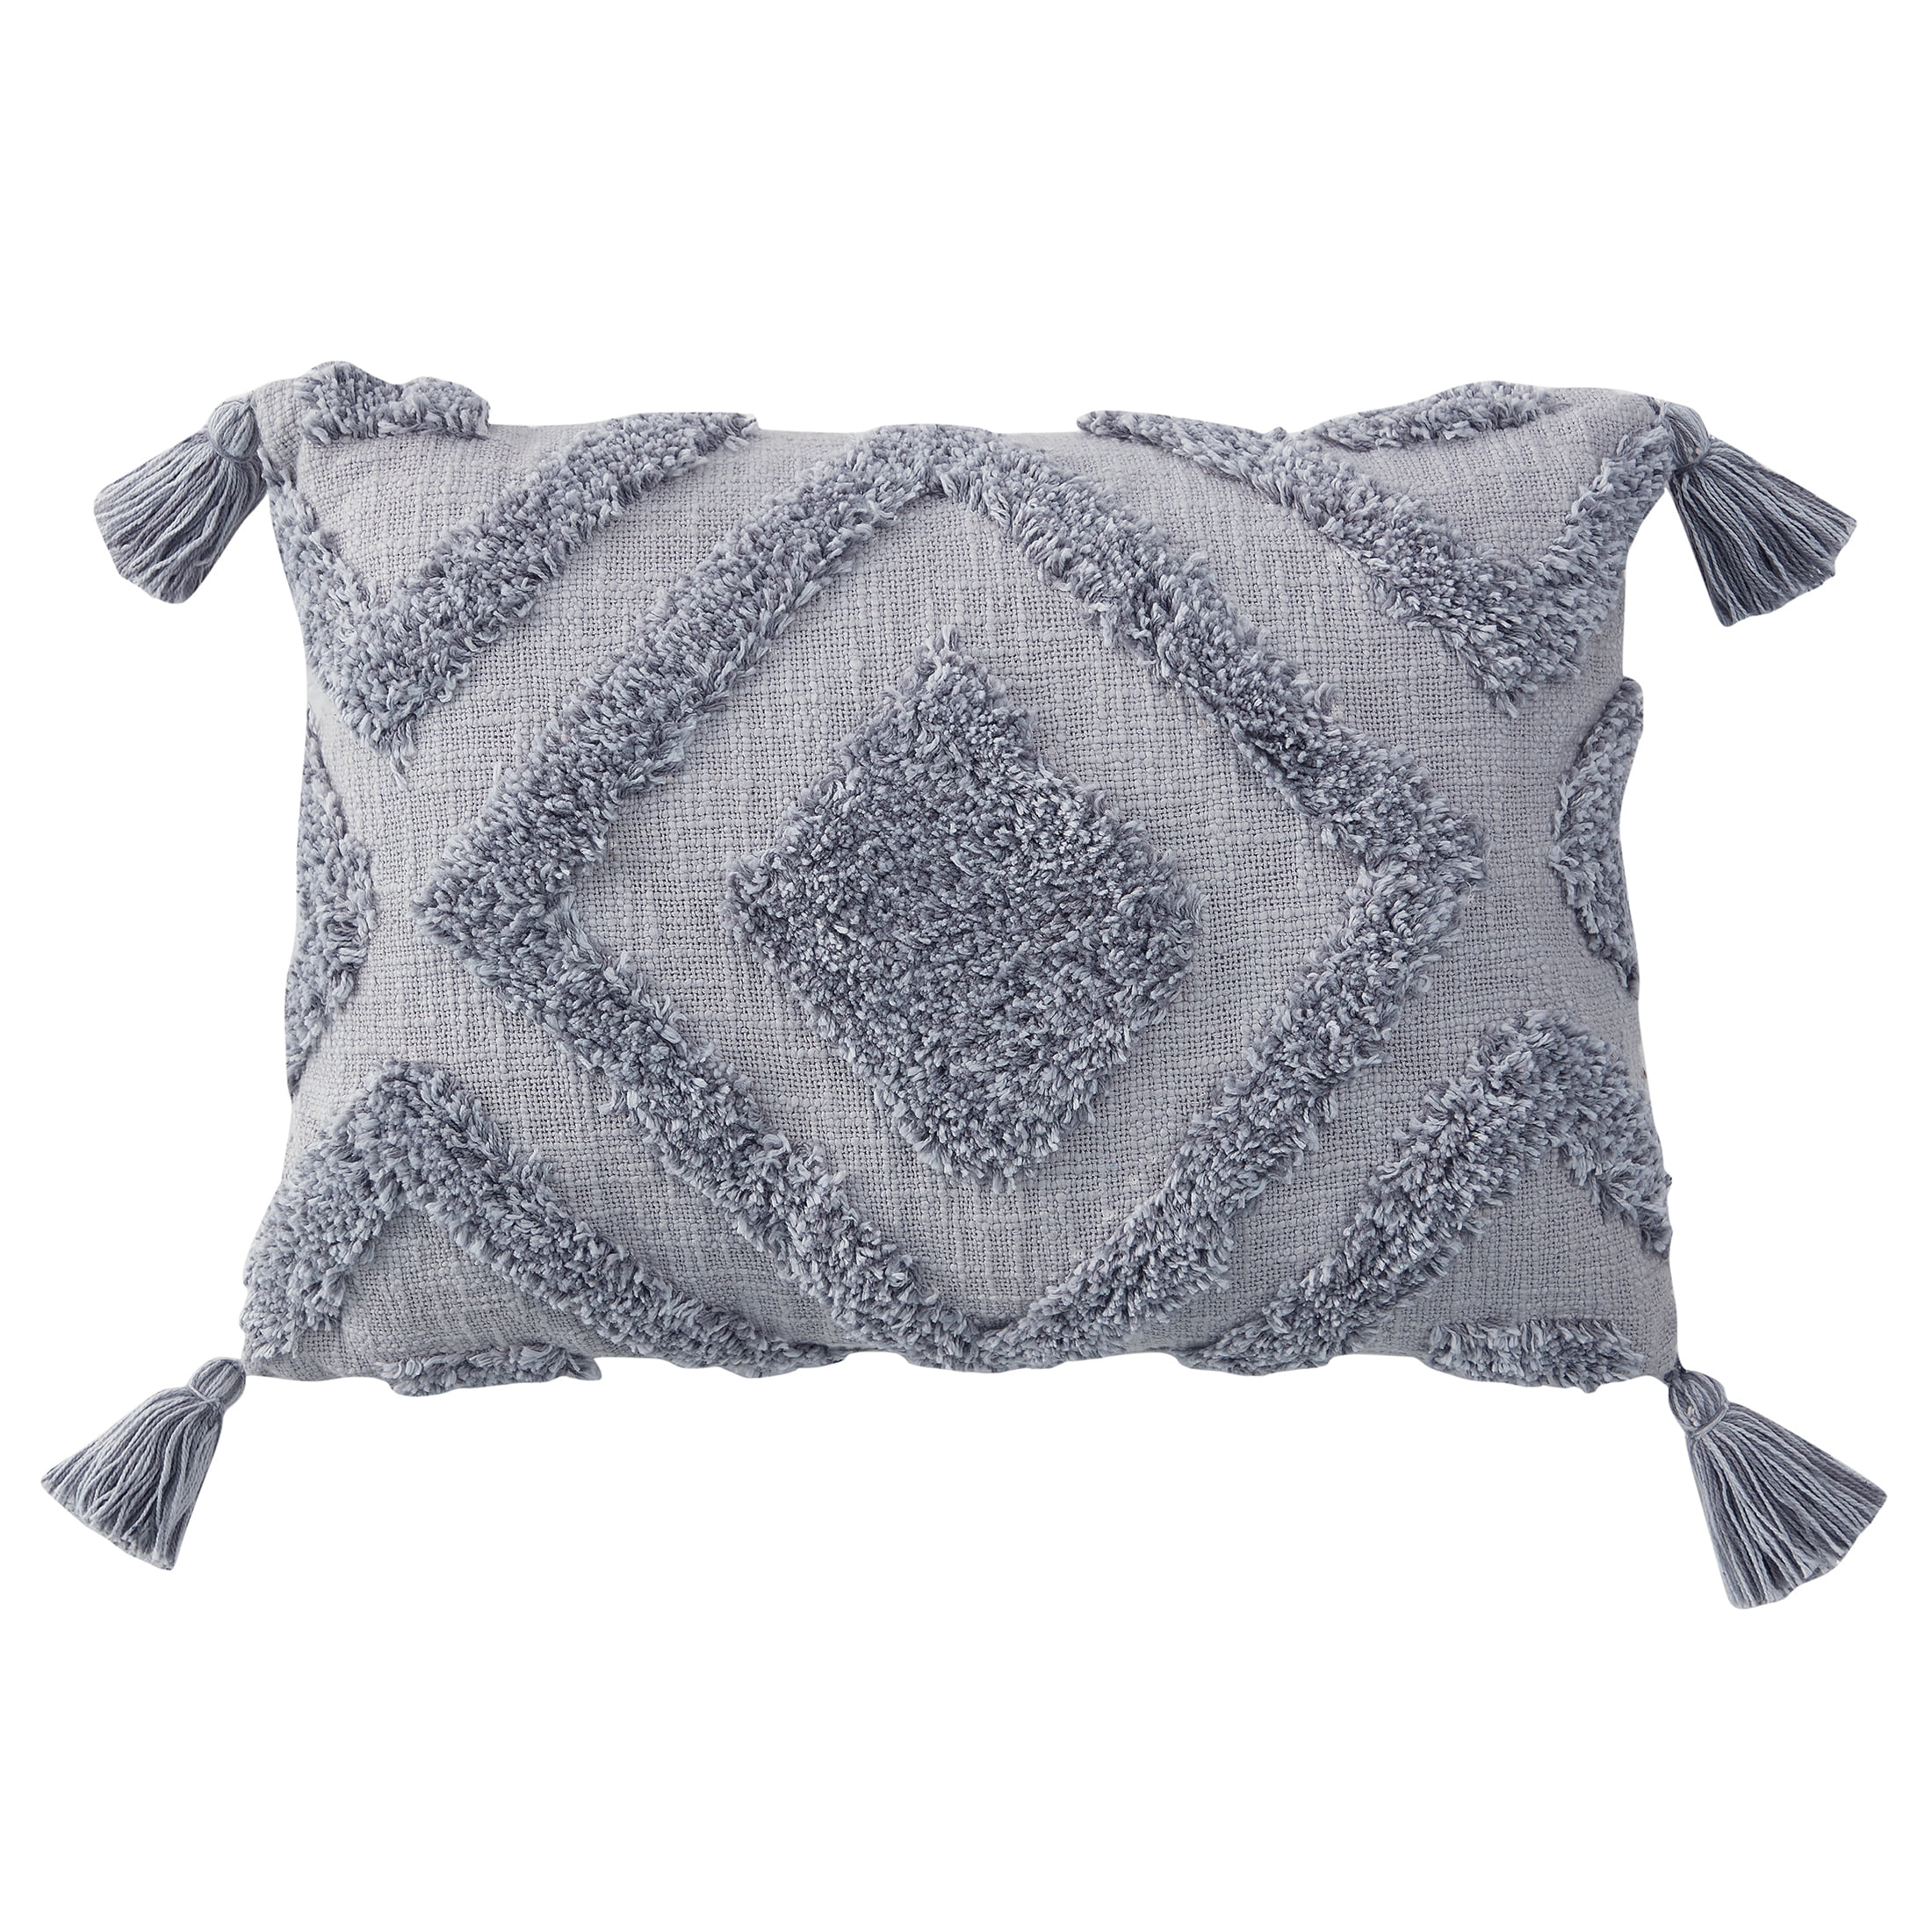 My Texas House Parker Tufted Cotton Oblong Decorative Pillow, 14 x 20,  Grey